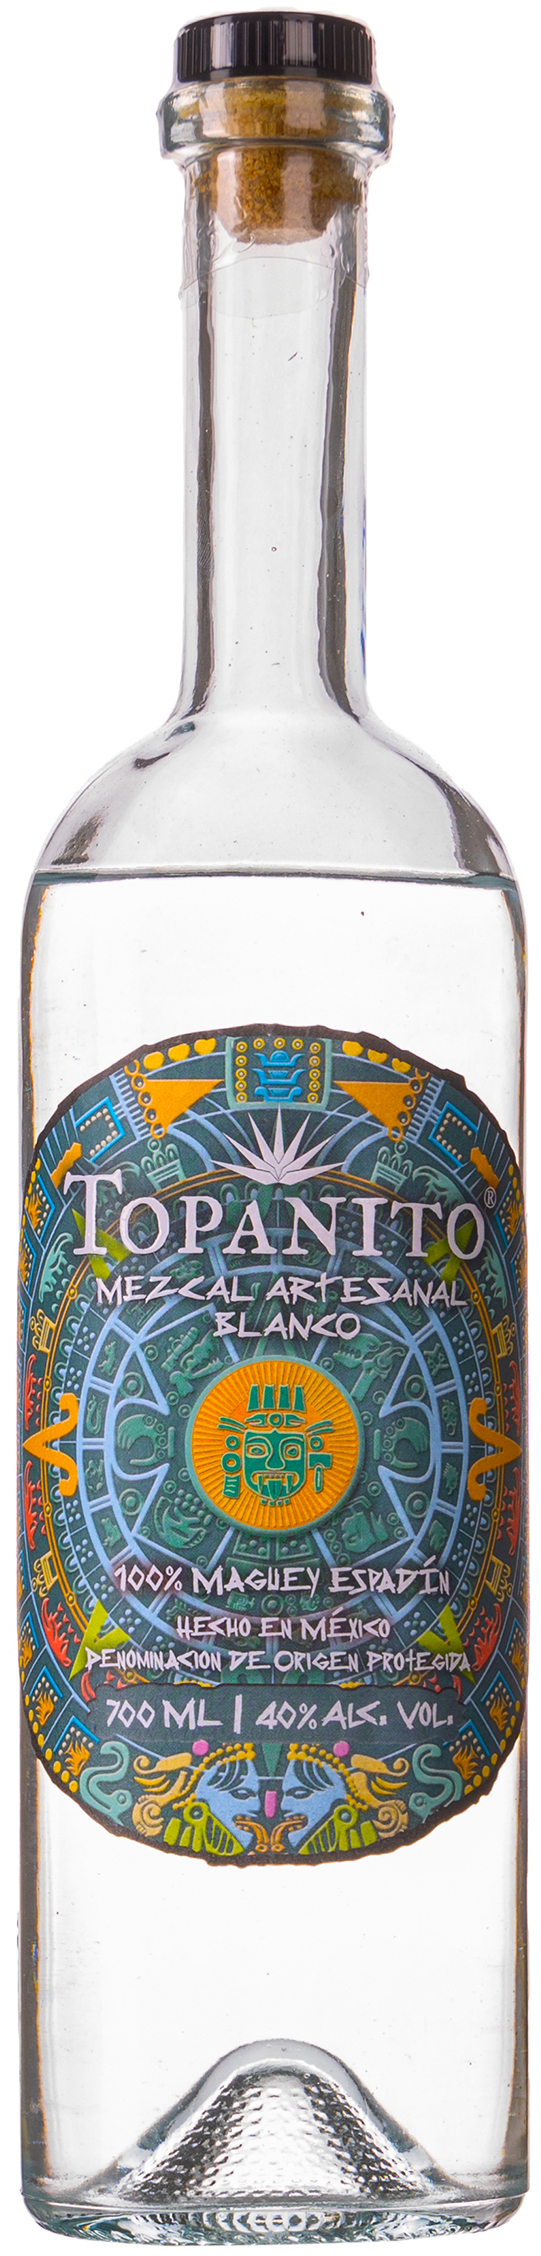 Topanito Mezcal Artesanal Blanco 40% vol. 0,70L